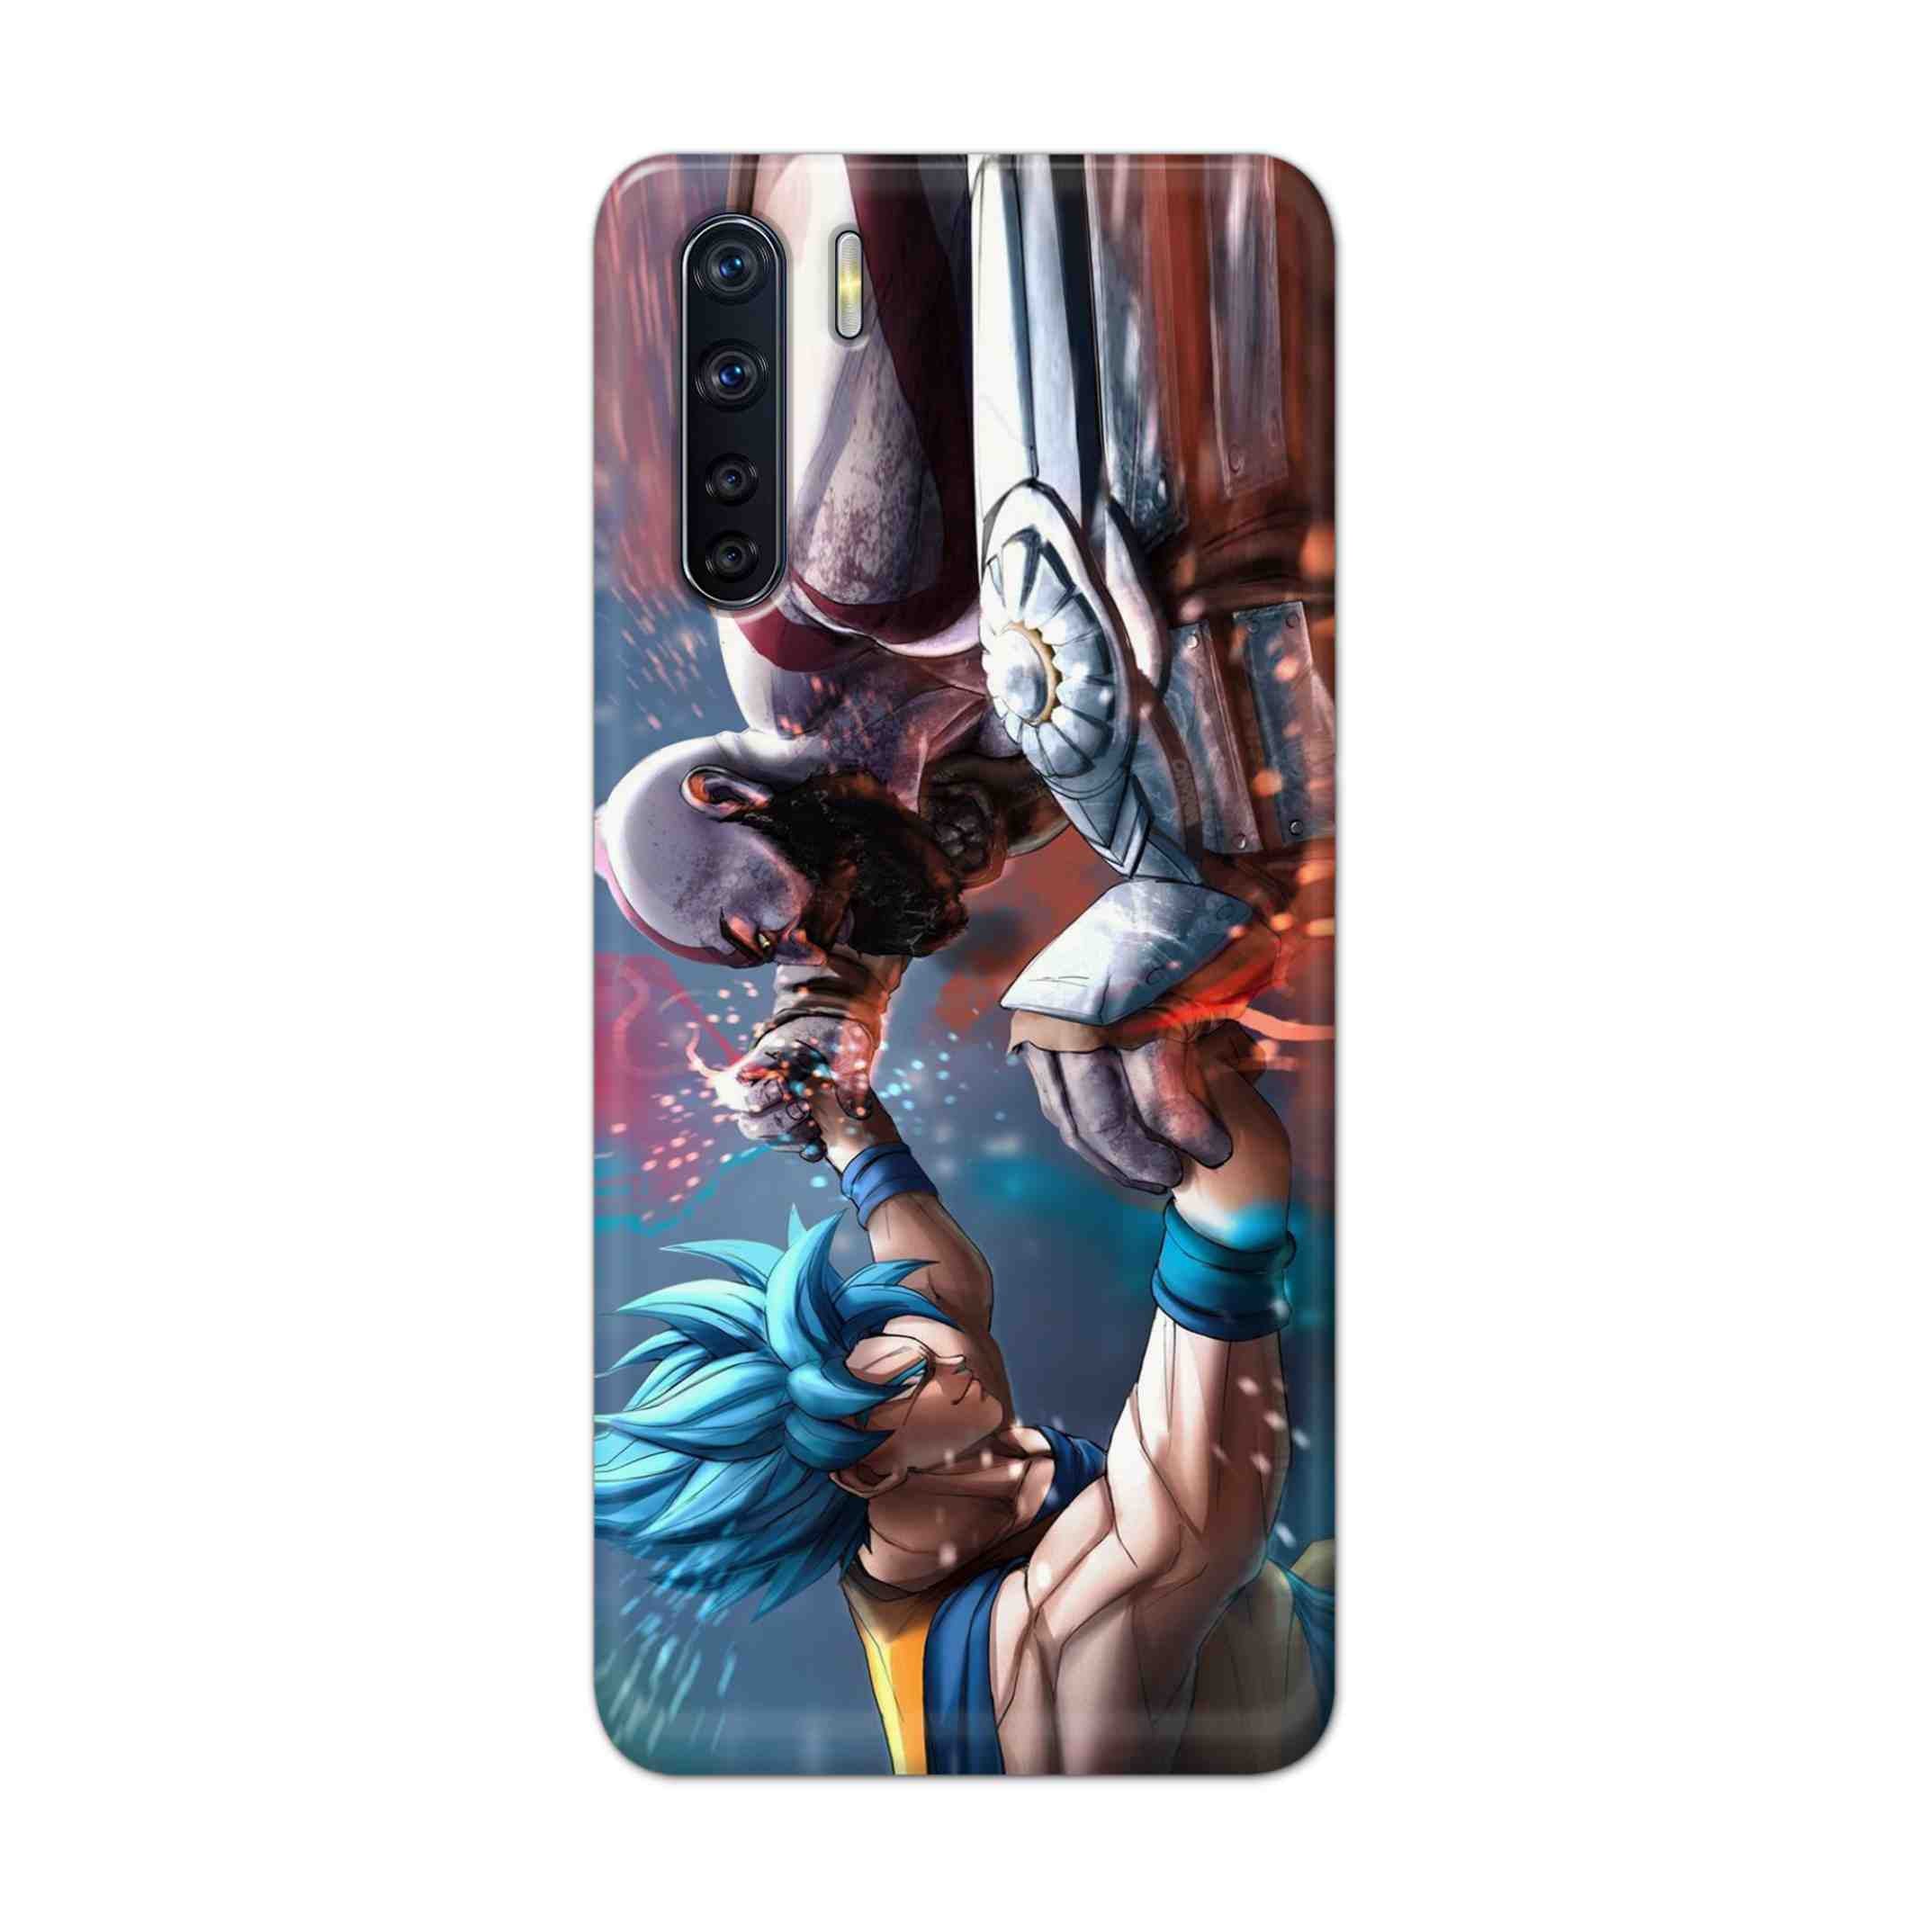 Buy Goku Vs Kratos Hard Back Mobile Phone Case Cover For OPPO F15 Online